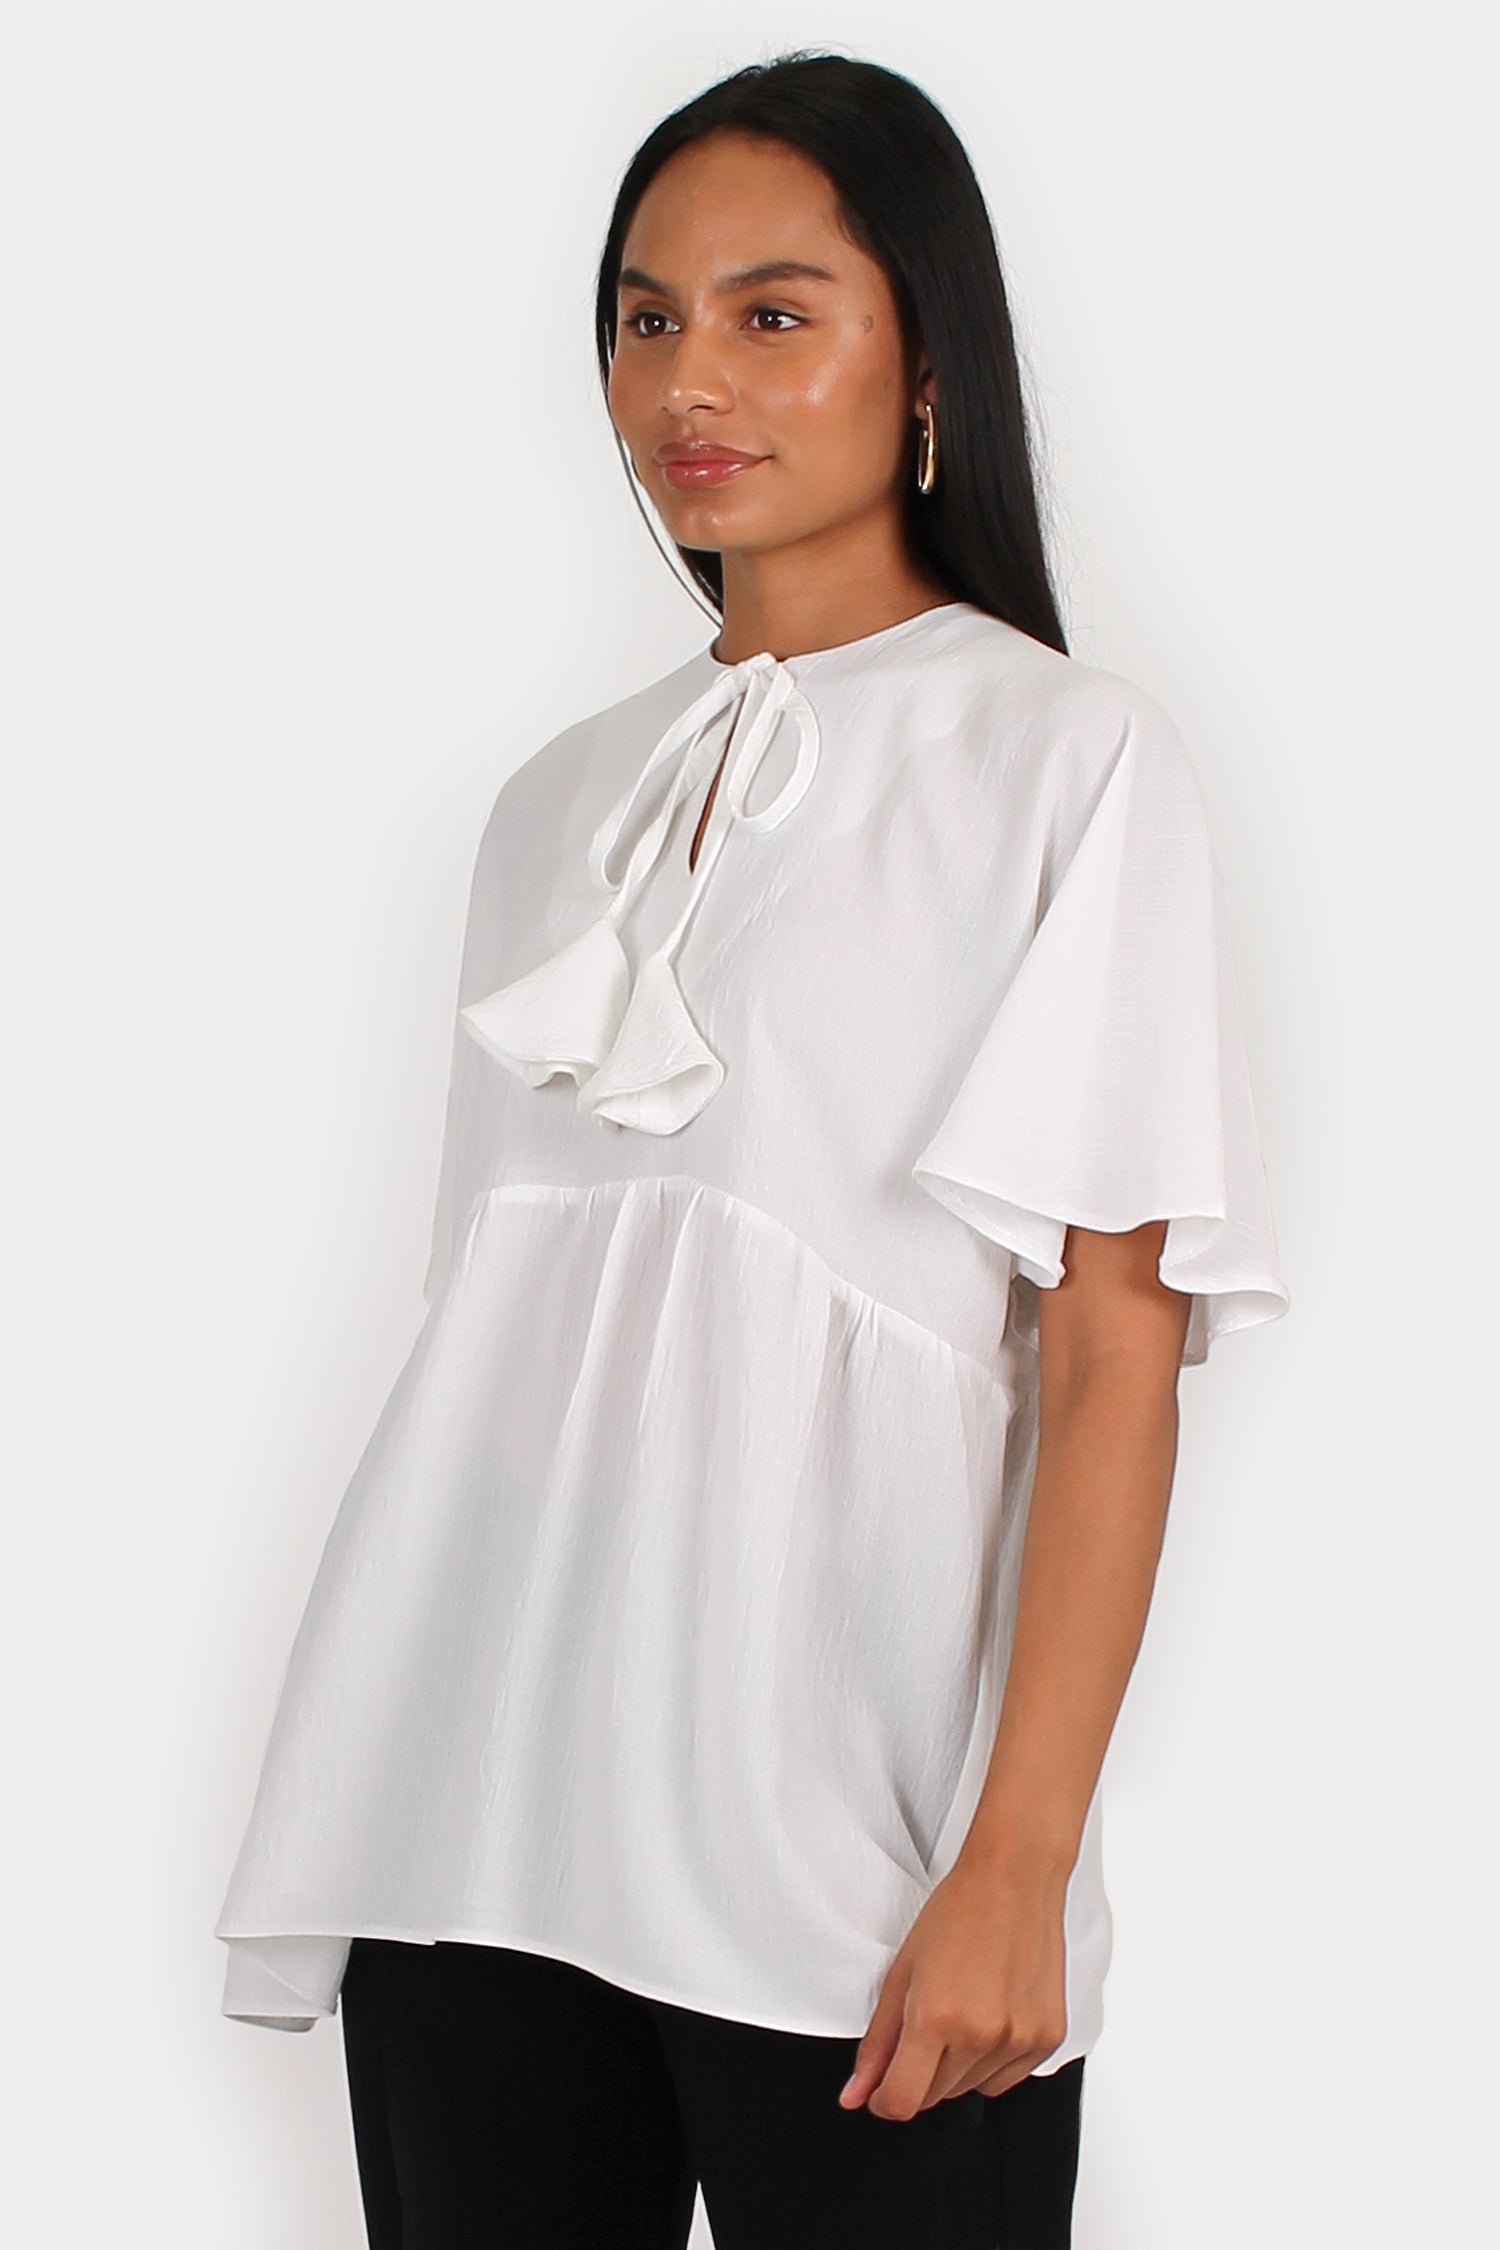 Juliet blouse in white